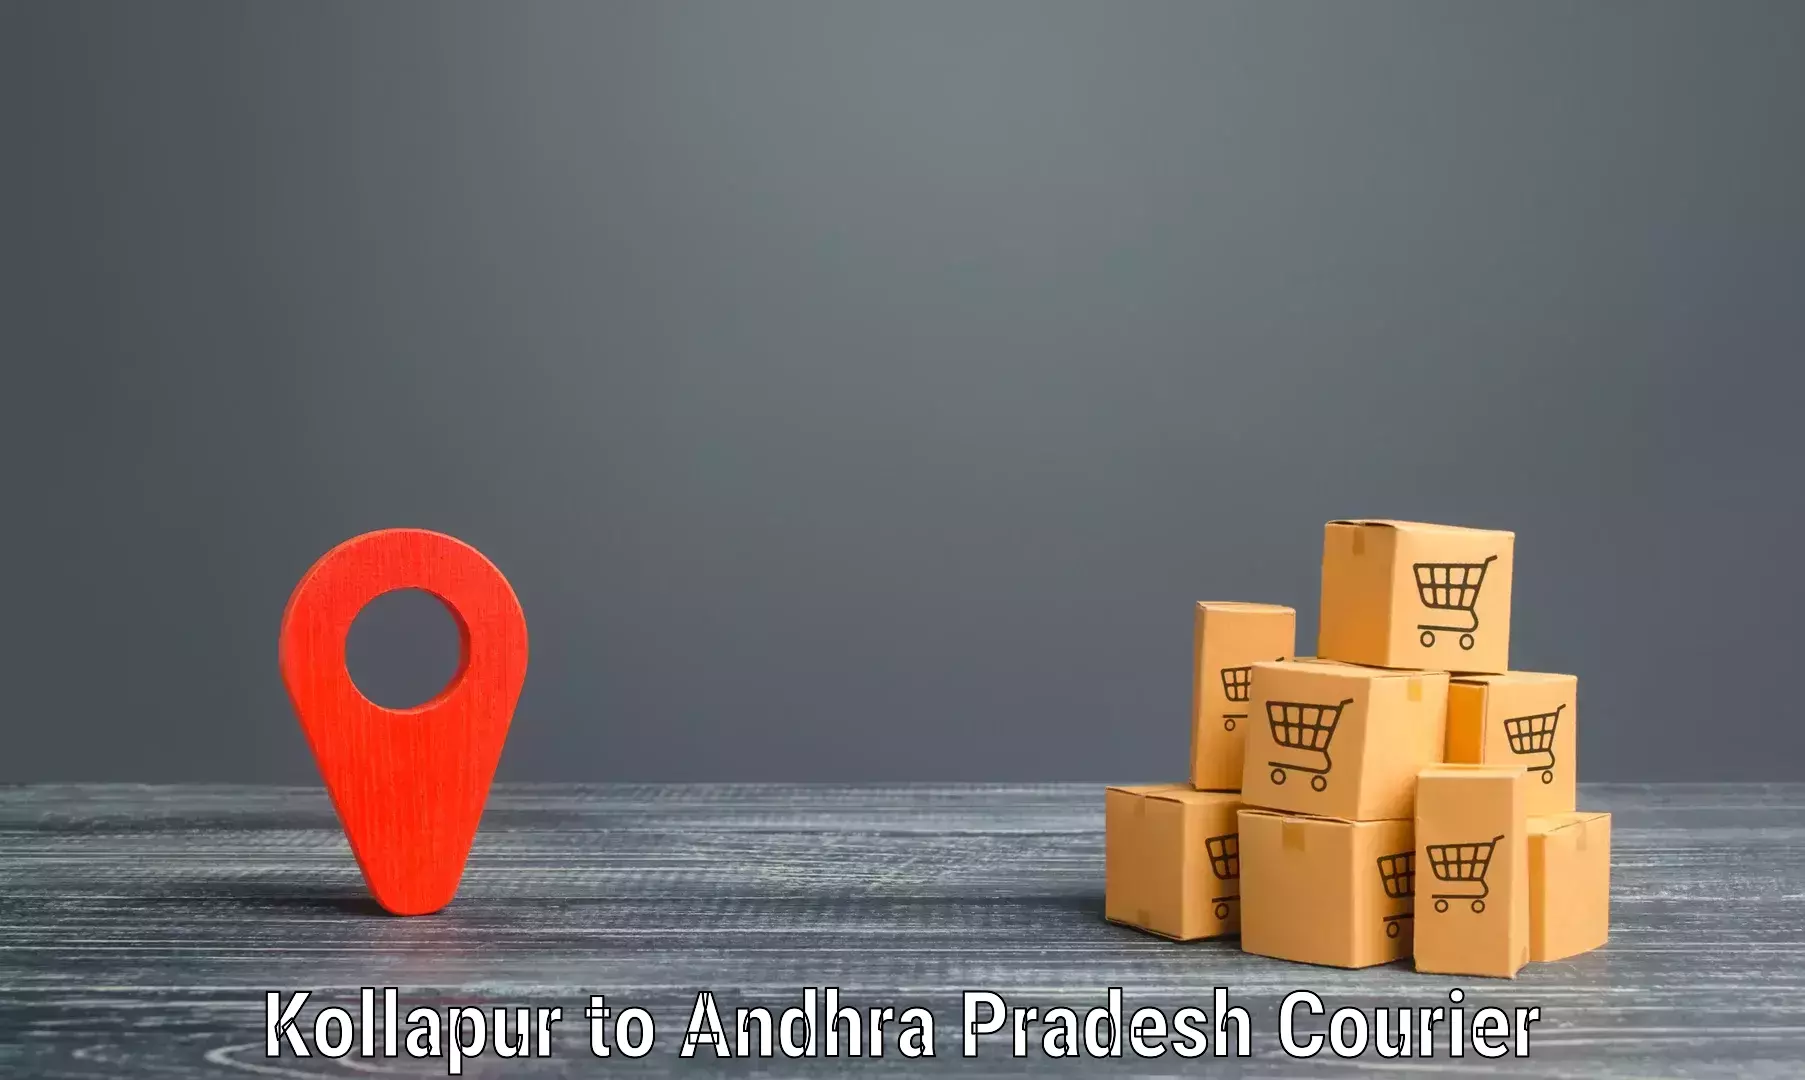 Lightweight parcel options Kollapur to Tirupati